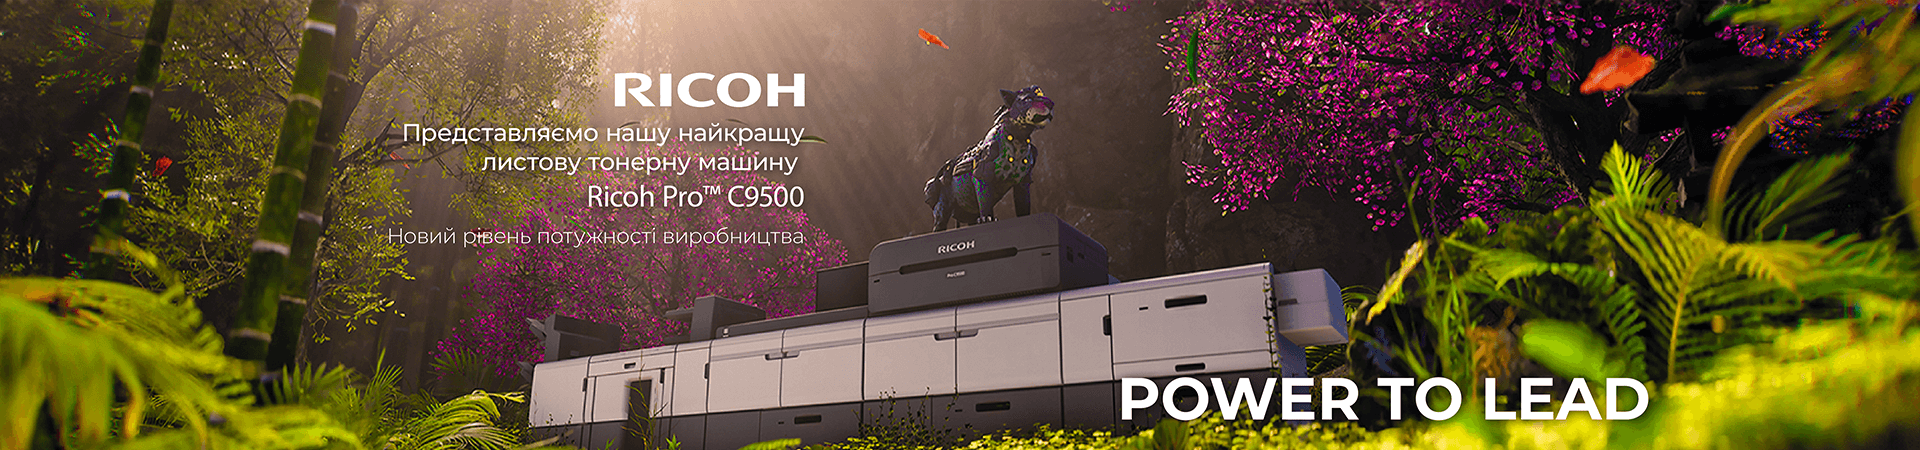 Ricoh Pro C9500 — найкраща листова тонерна машина